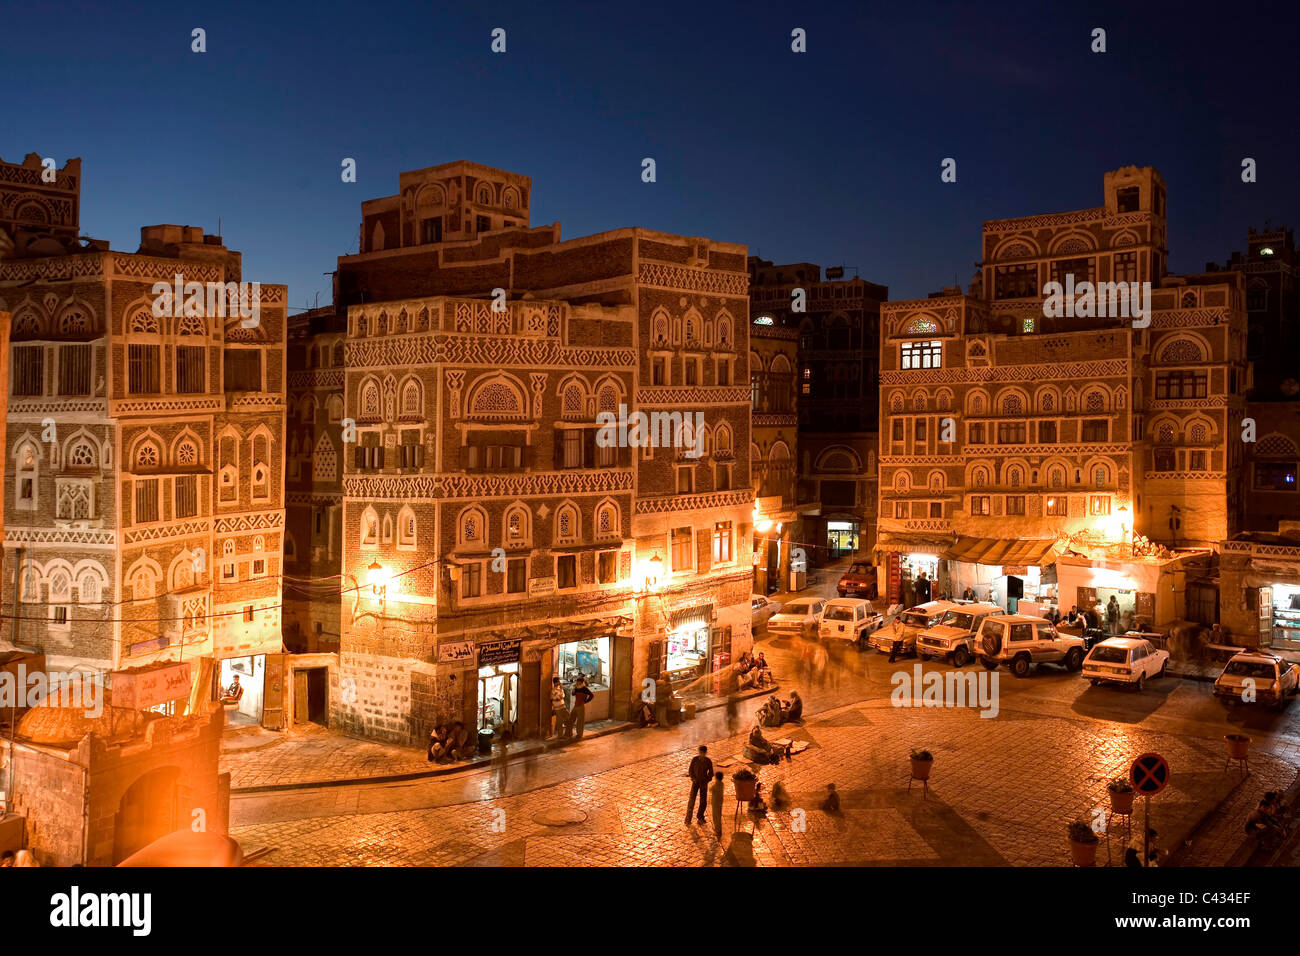 The entrance at Bab al Yemen, into the Old City of Sanaa, at dusk - Yemen Stock Photo